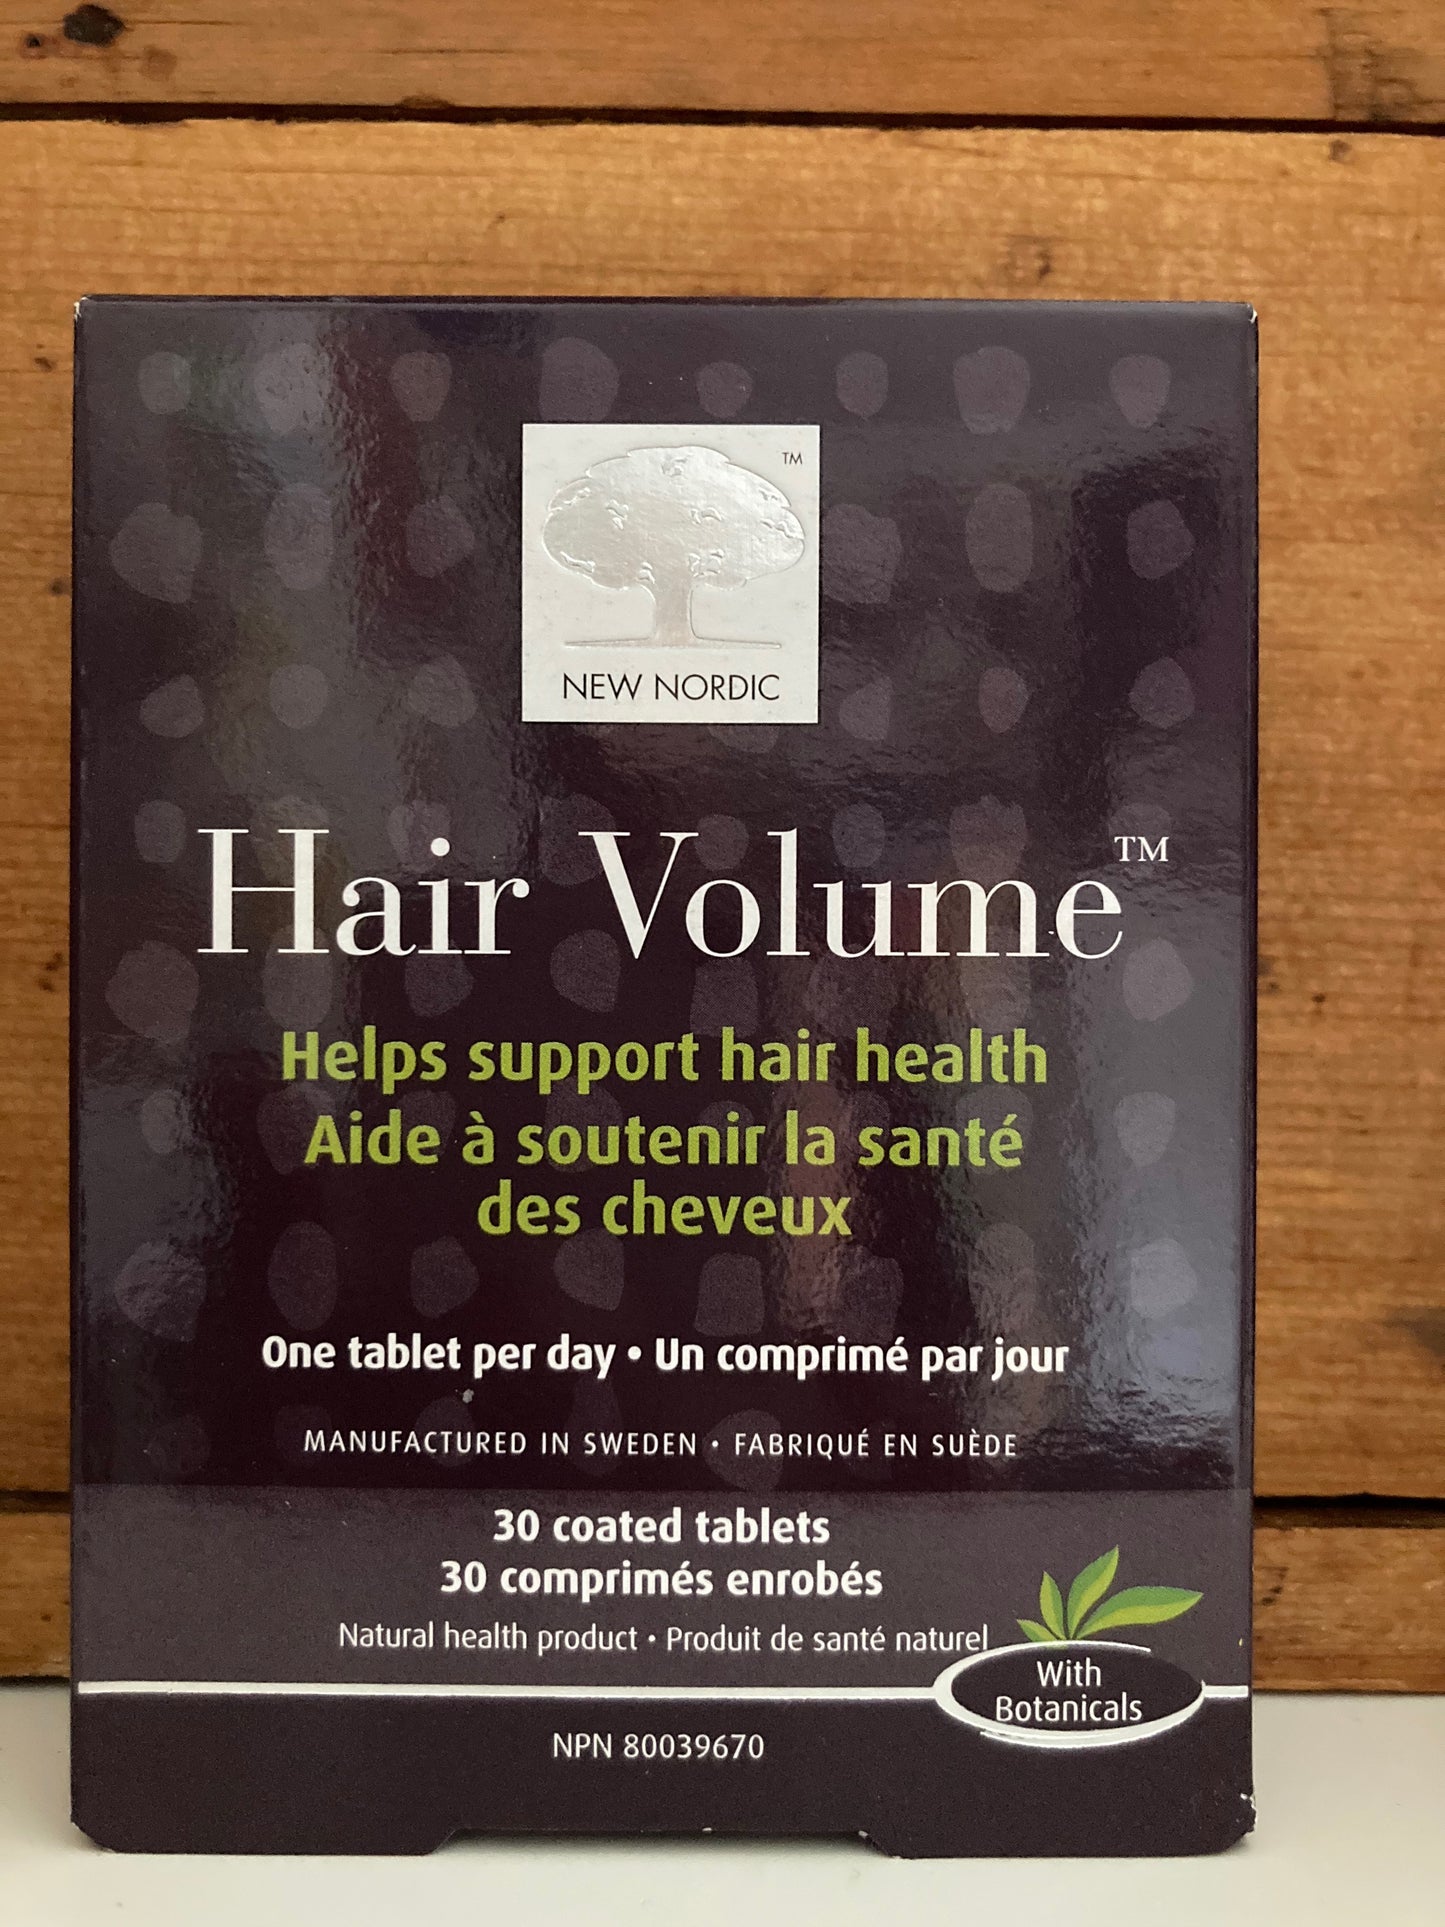 Holistic Health - New Nordic HAIR VOLUME, NEW! Gummies!